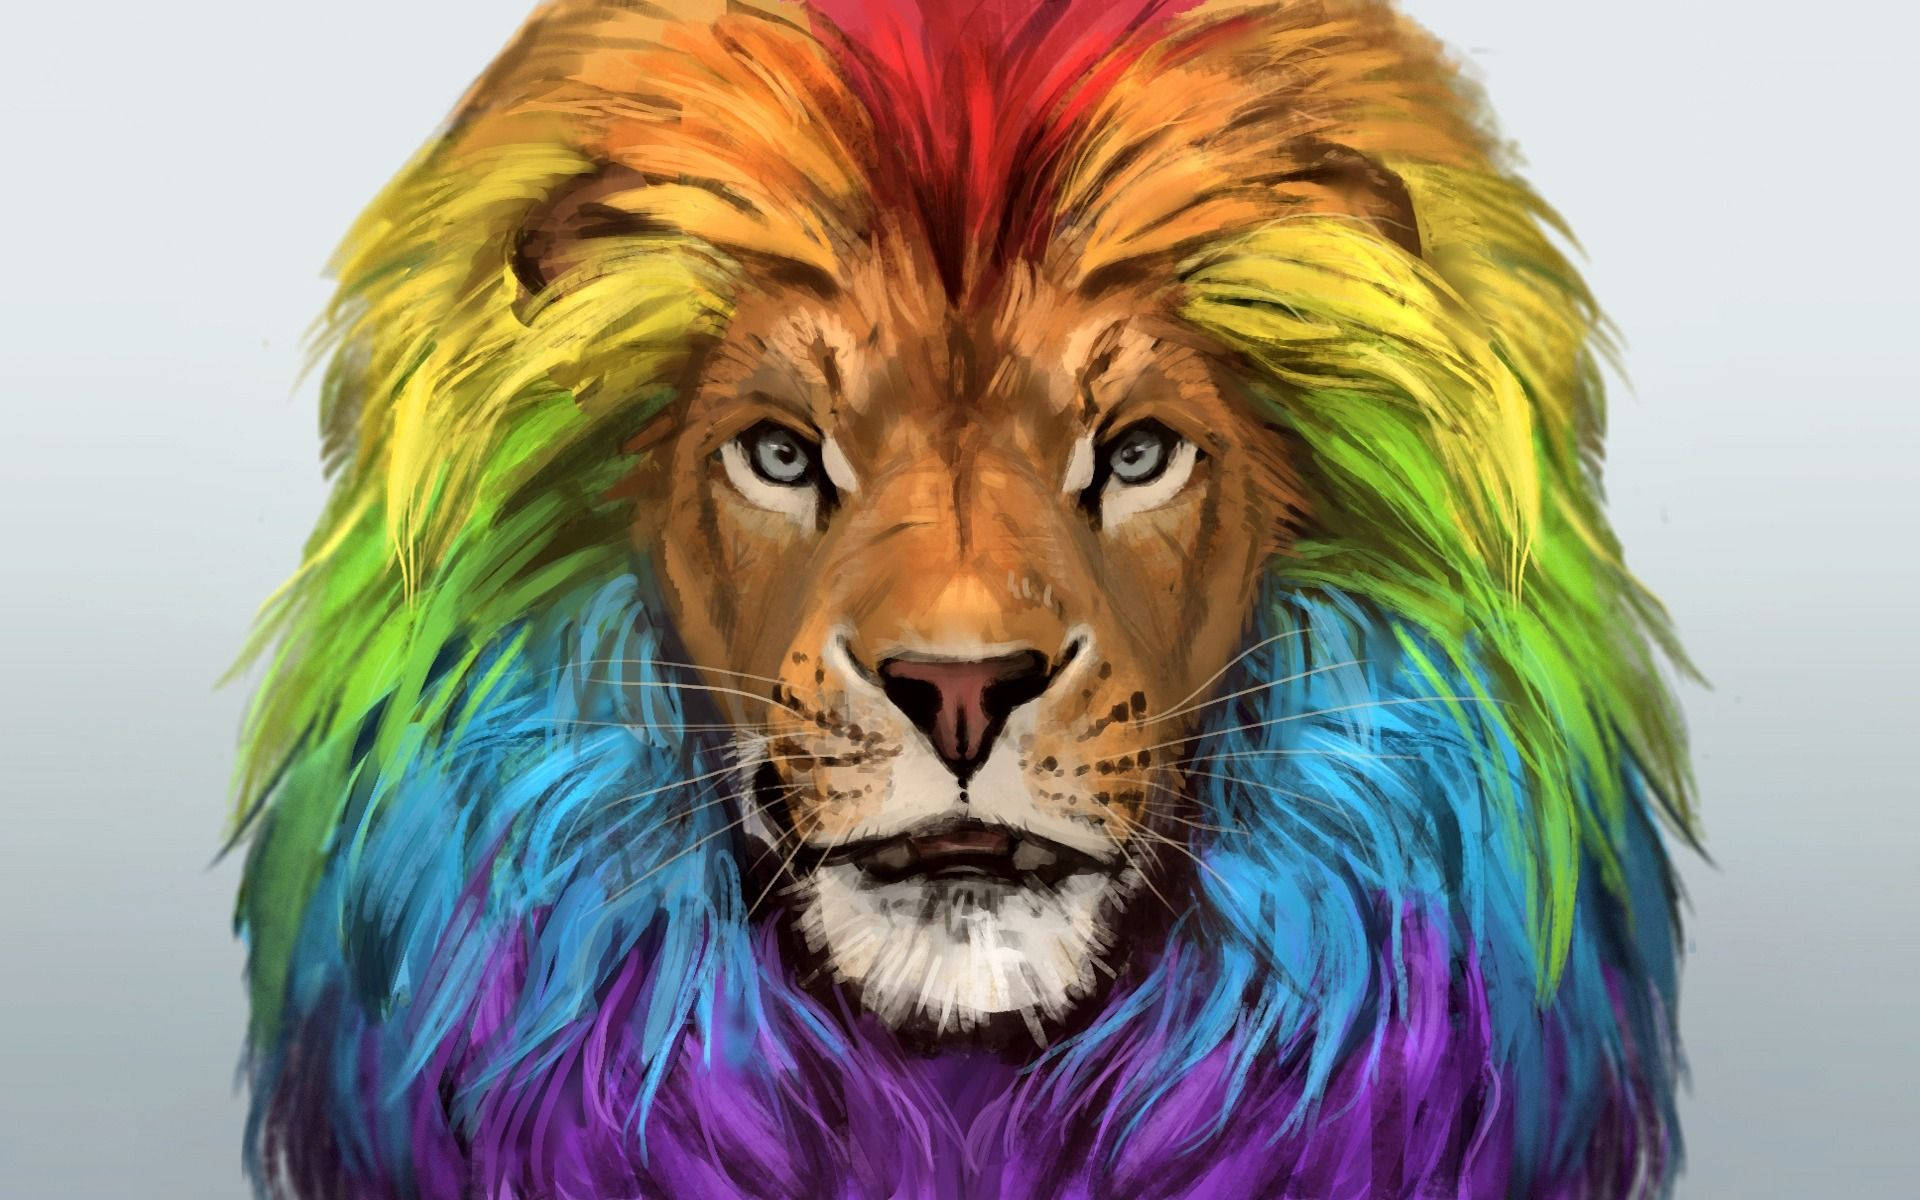 Rainbow Mane Lion Wallpaper